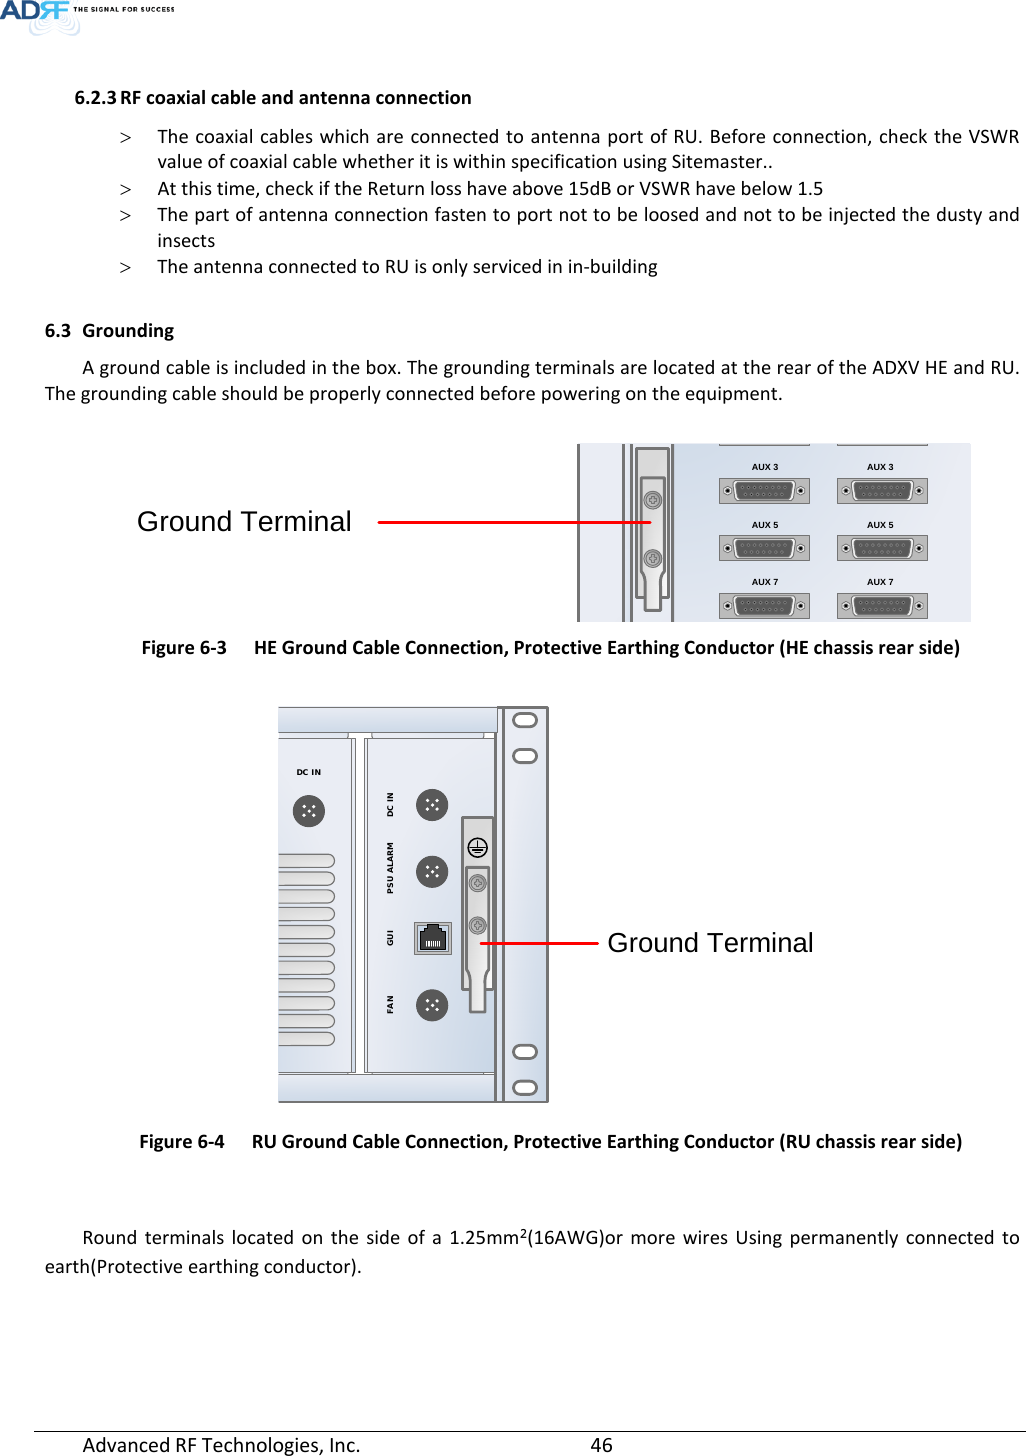 Page 46 of ADRF KOREA ADXV-R-336 DAS (Distributed Antenna System) User Manual ADXV DAS